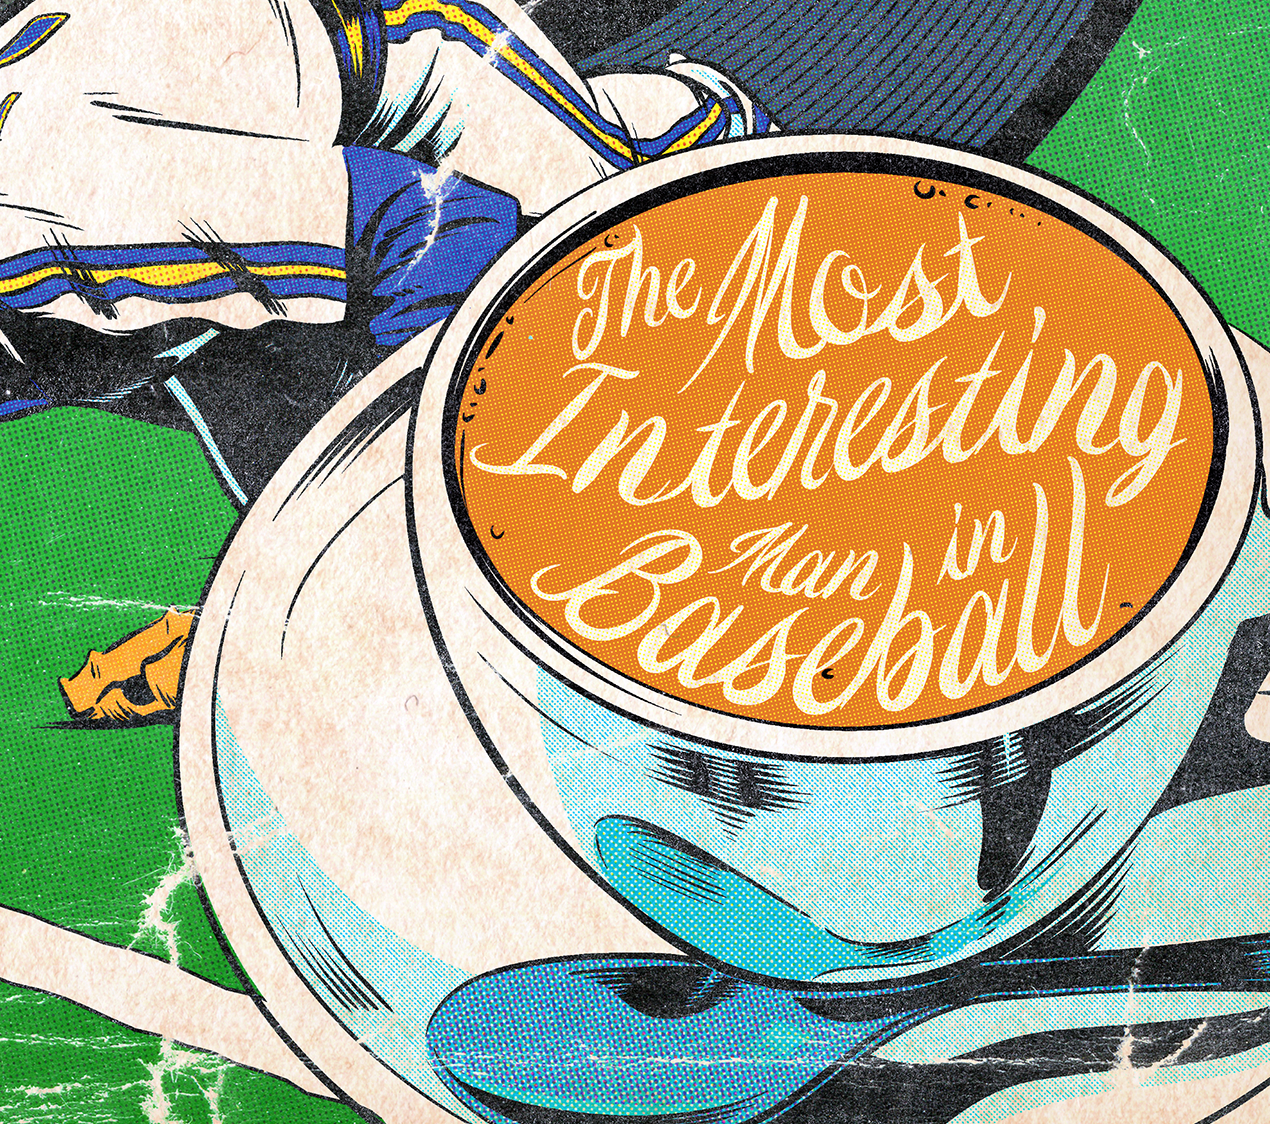 150. "Lenny Randle: The Most Interesting Man in Baseball" 7" x 10.5" Art Print